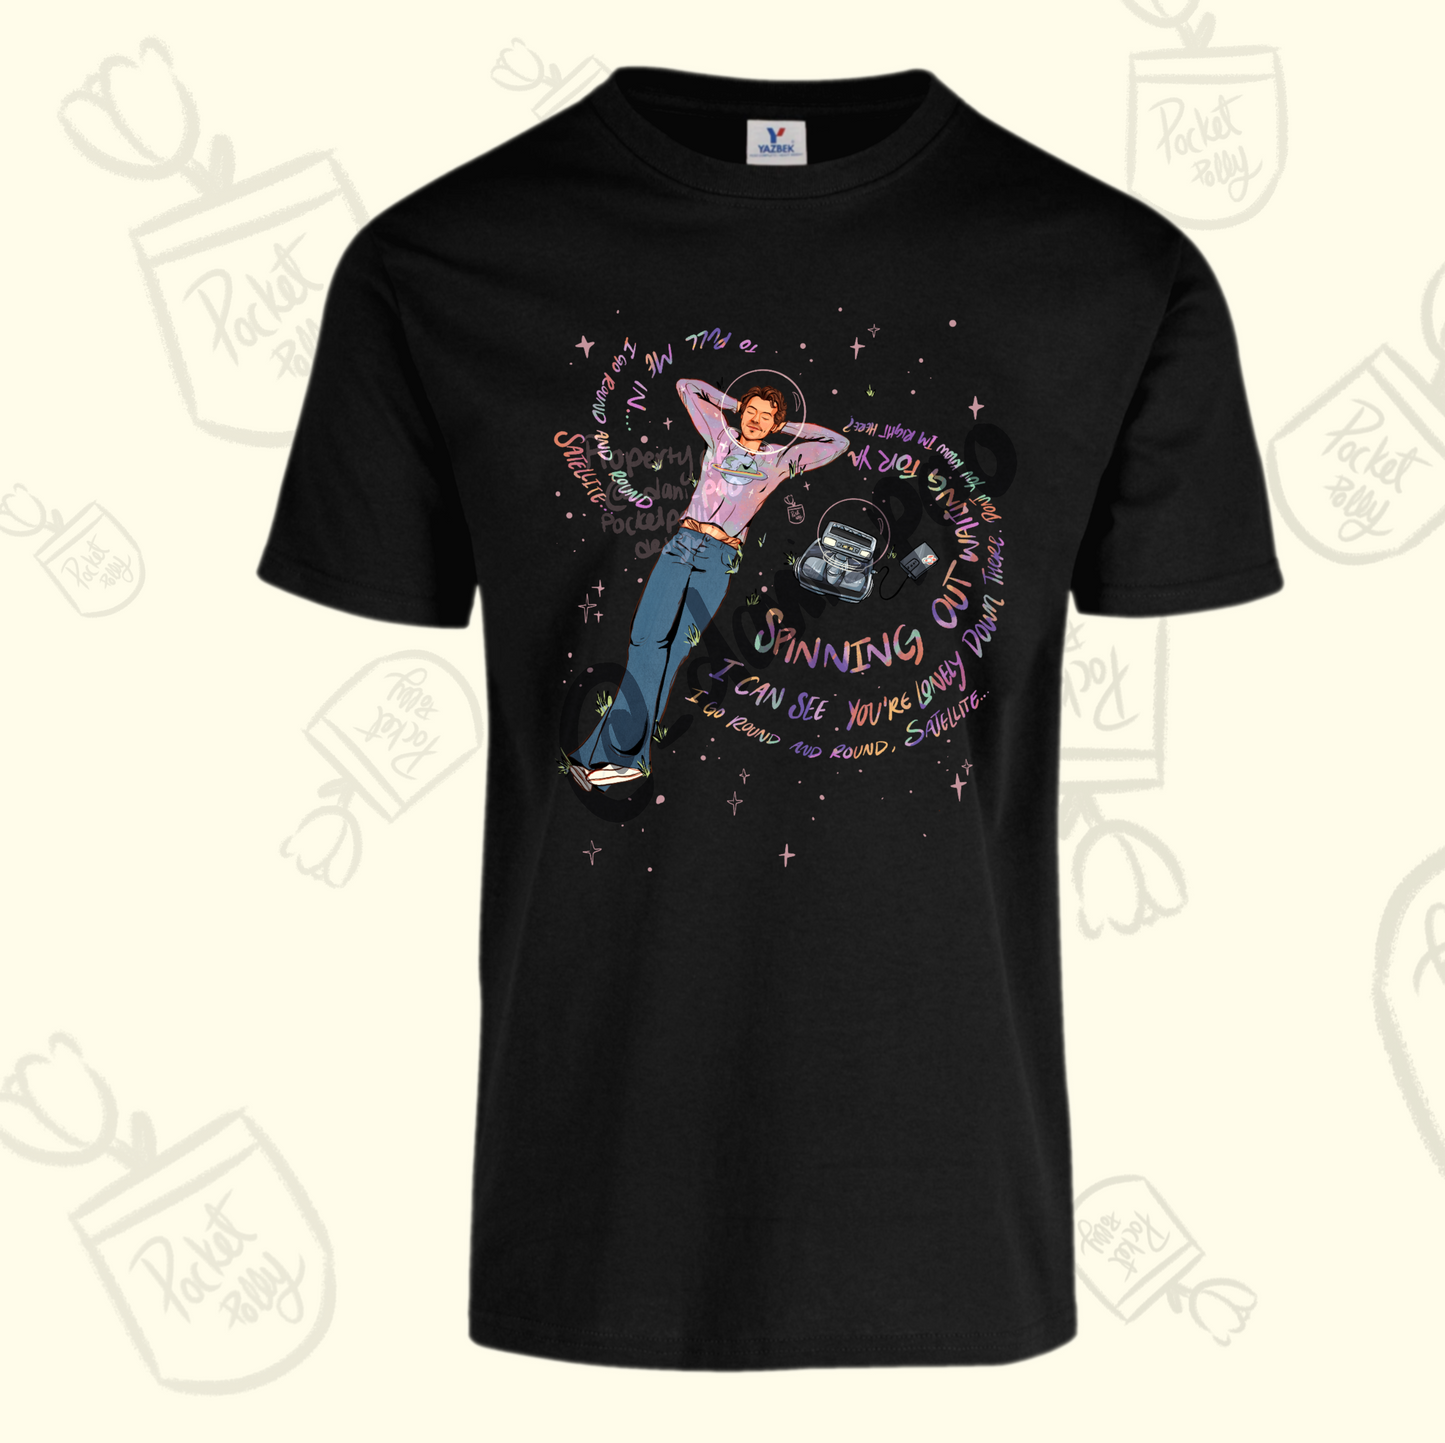 Satellite Harry Styles T-shirt